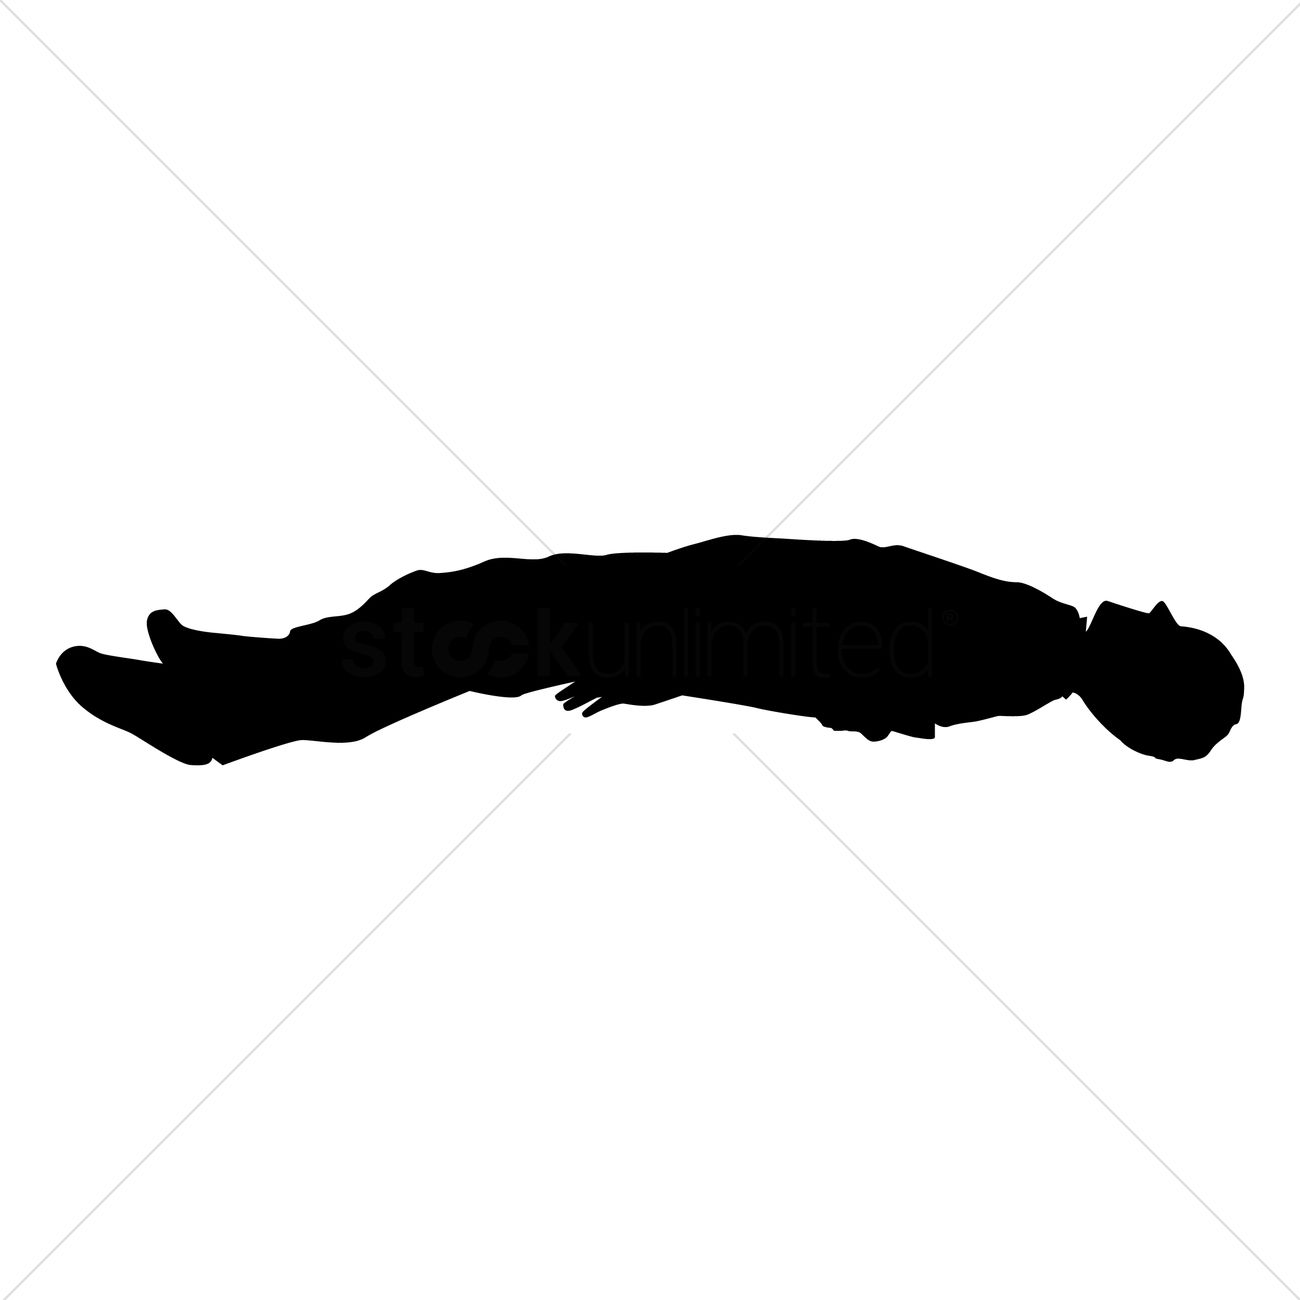 Indian man lying on floor. Fu